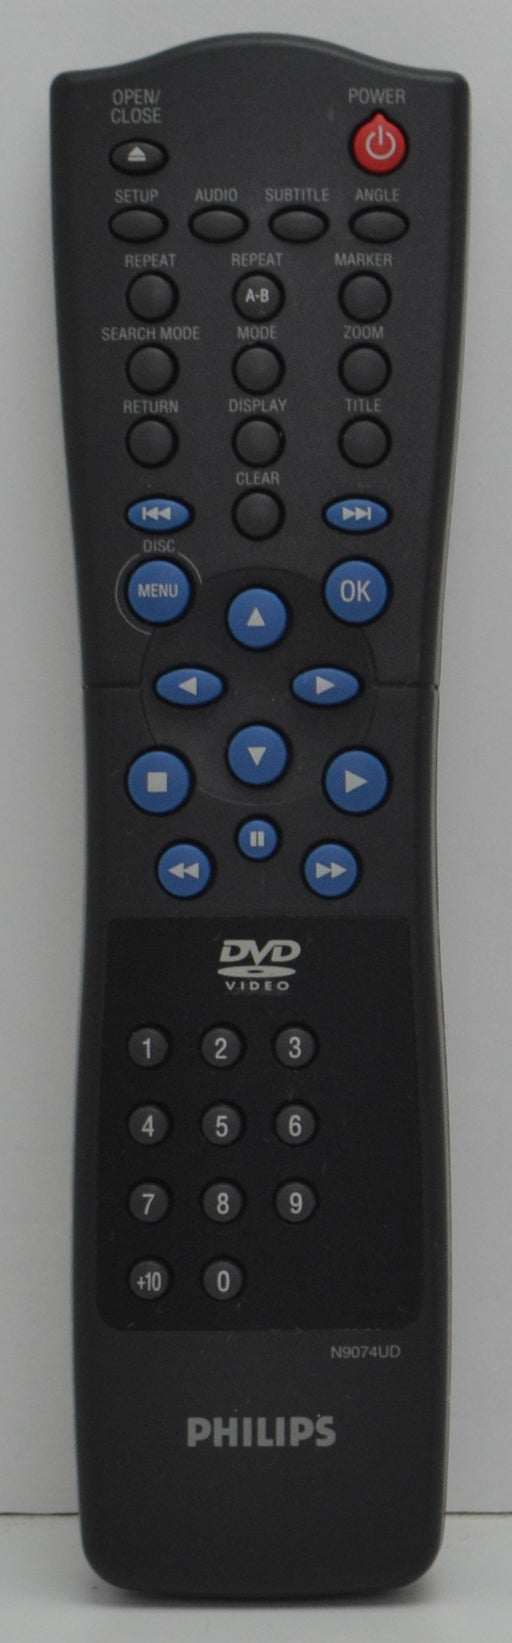 Philip N9074UD DVD Player Remote Control-Remote-SpenCertified-refurbished-vintage-electonics